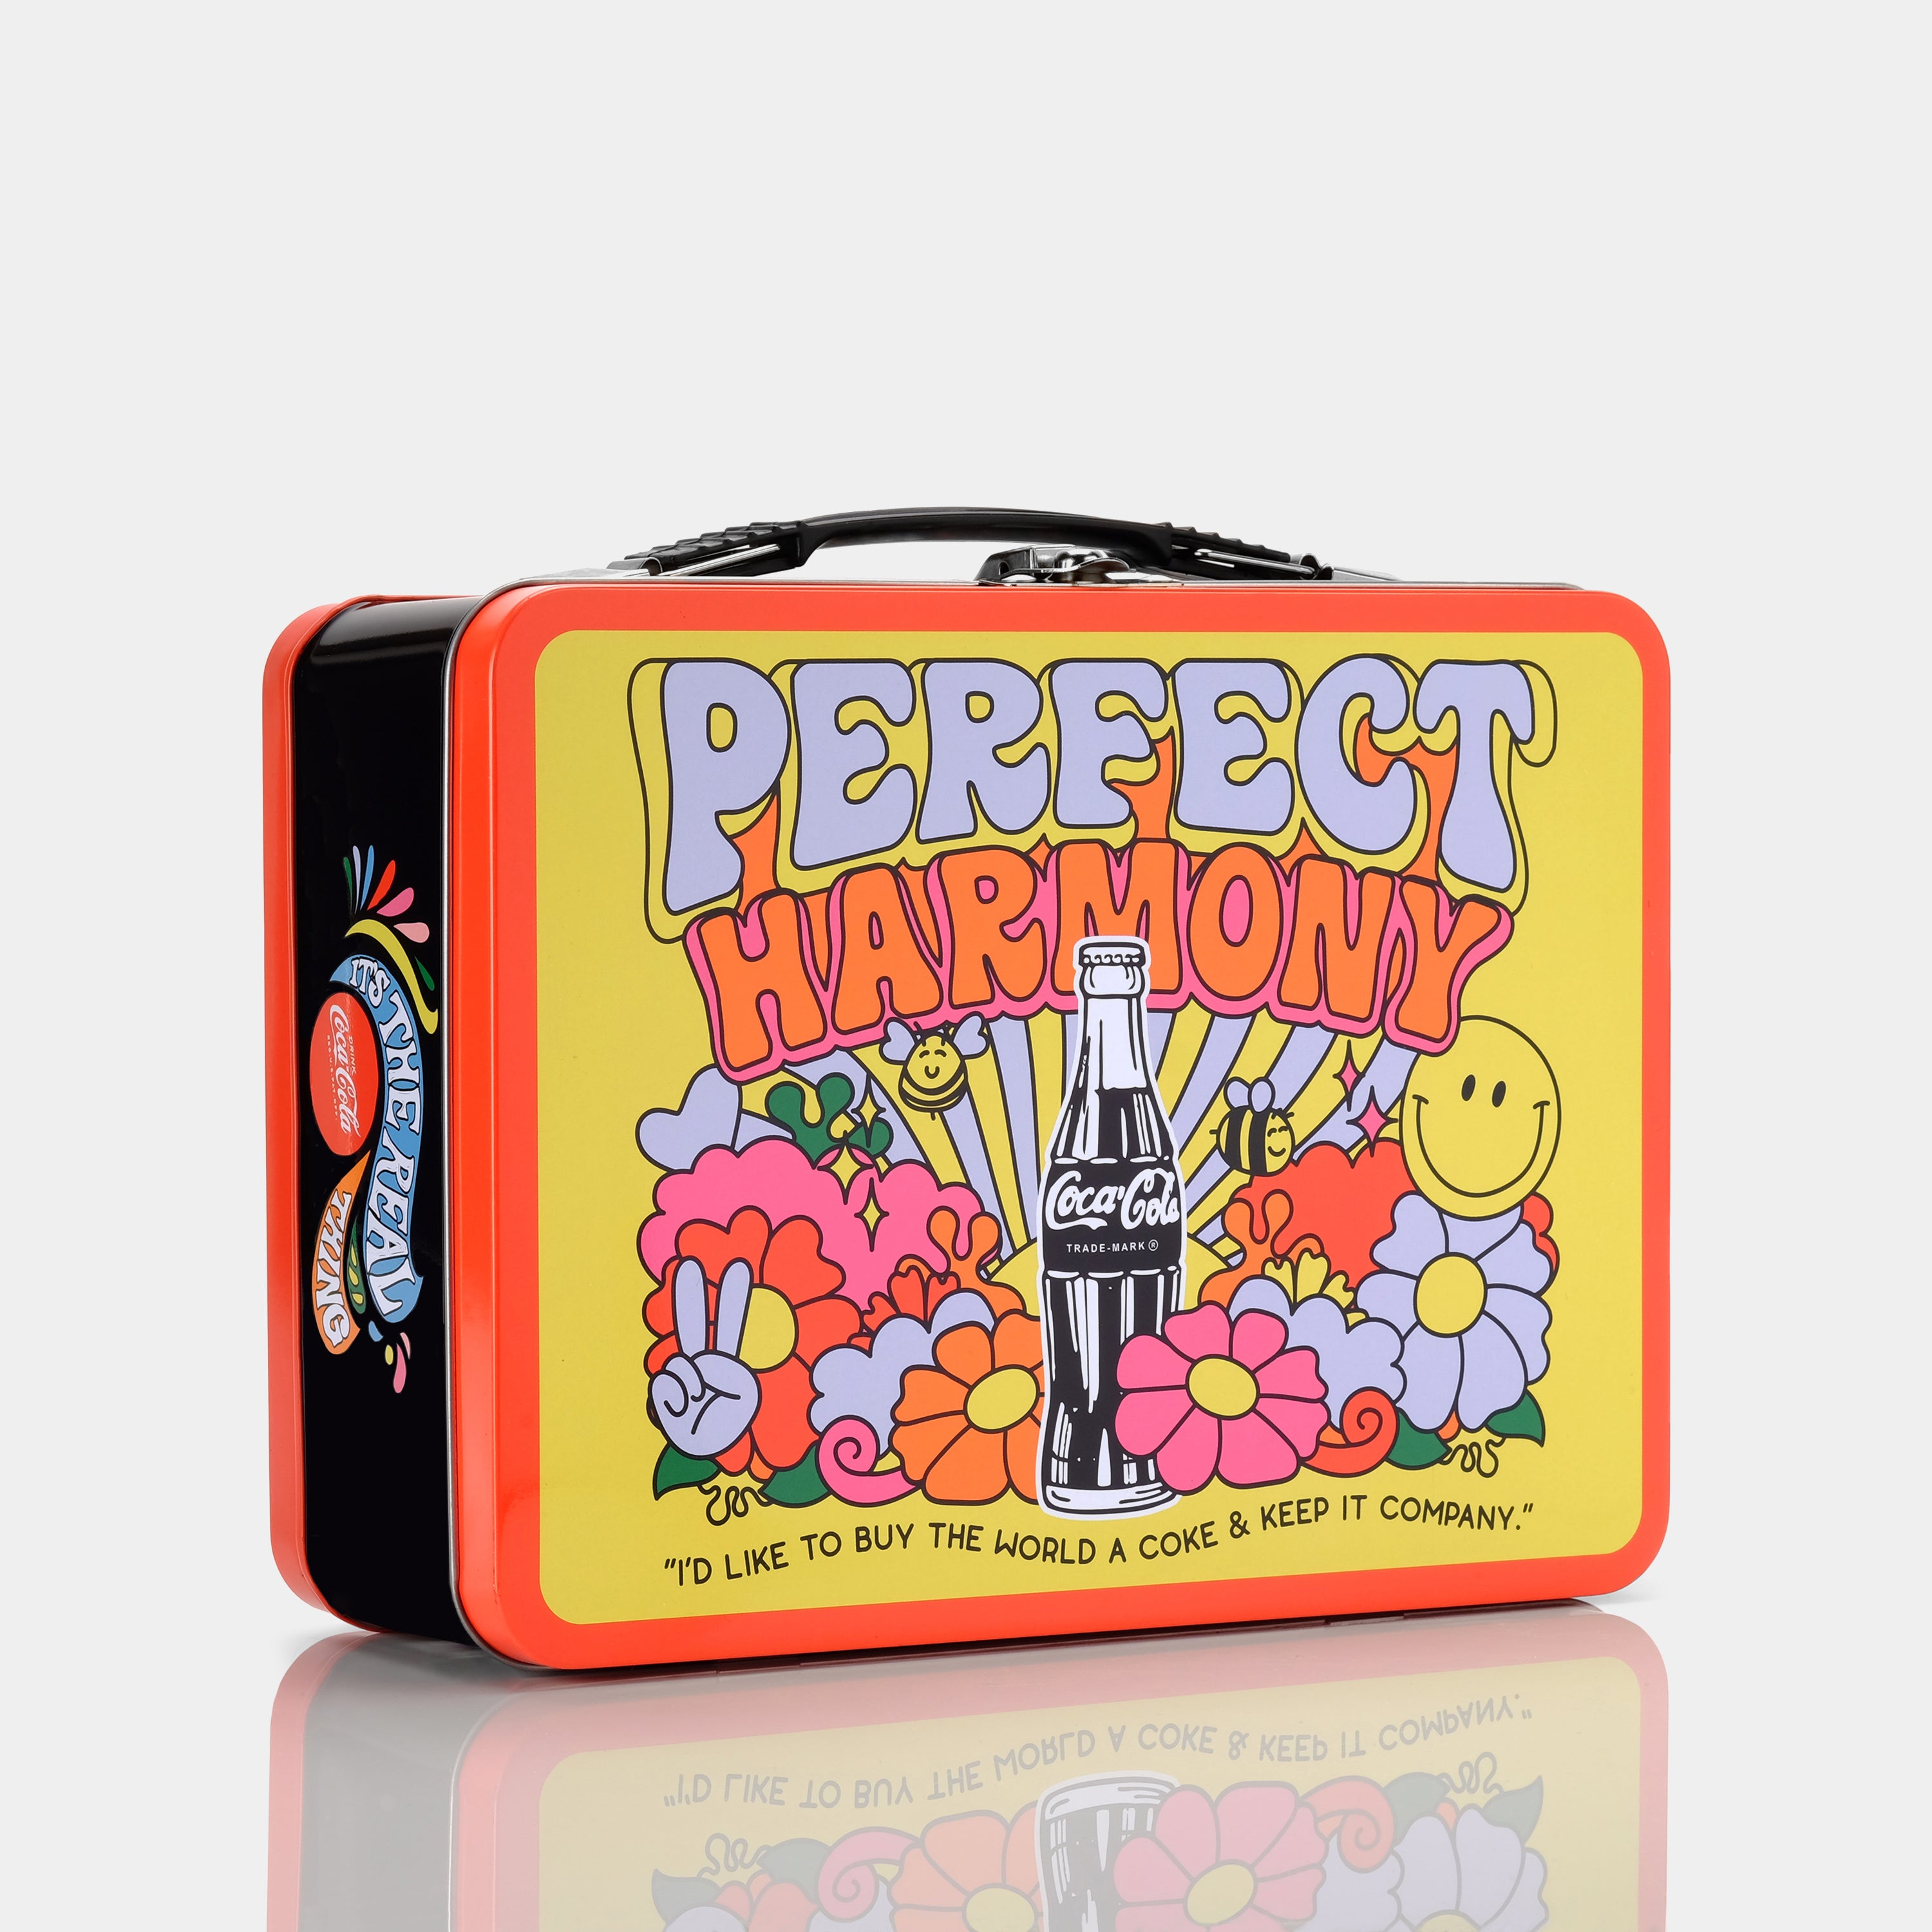 Coca-Cola "Perfect Harmony" Vintage-Inspired Tin Lunchbox